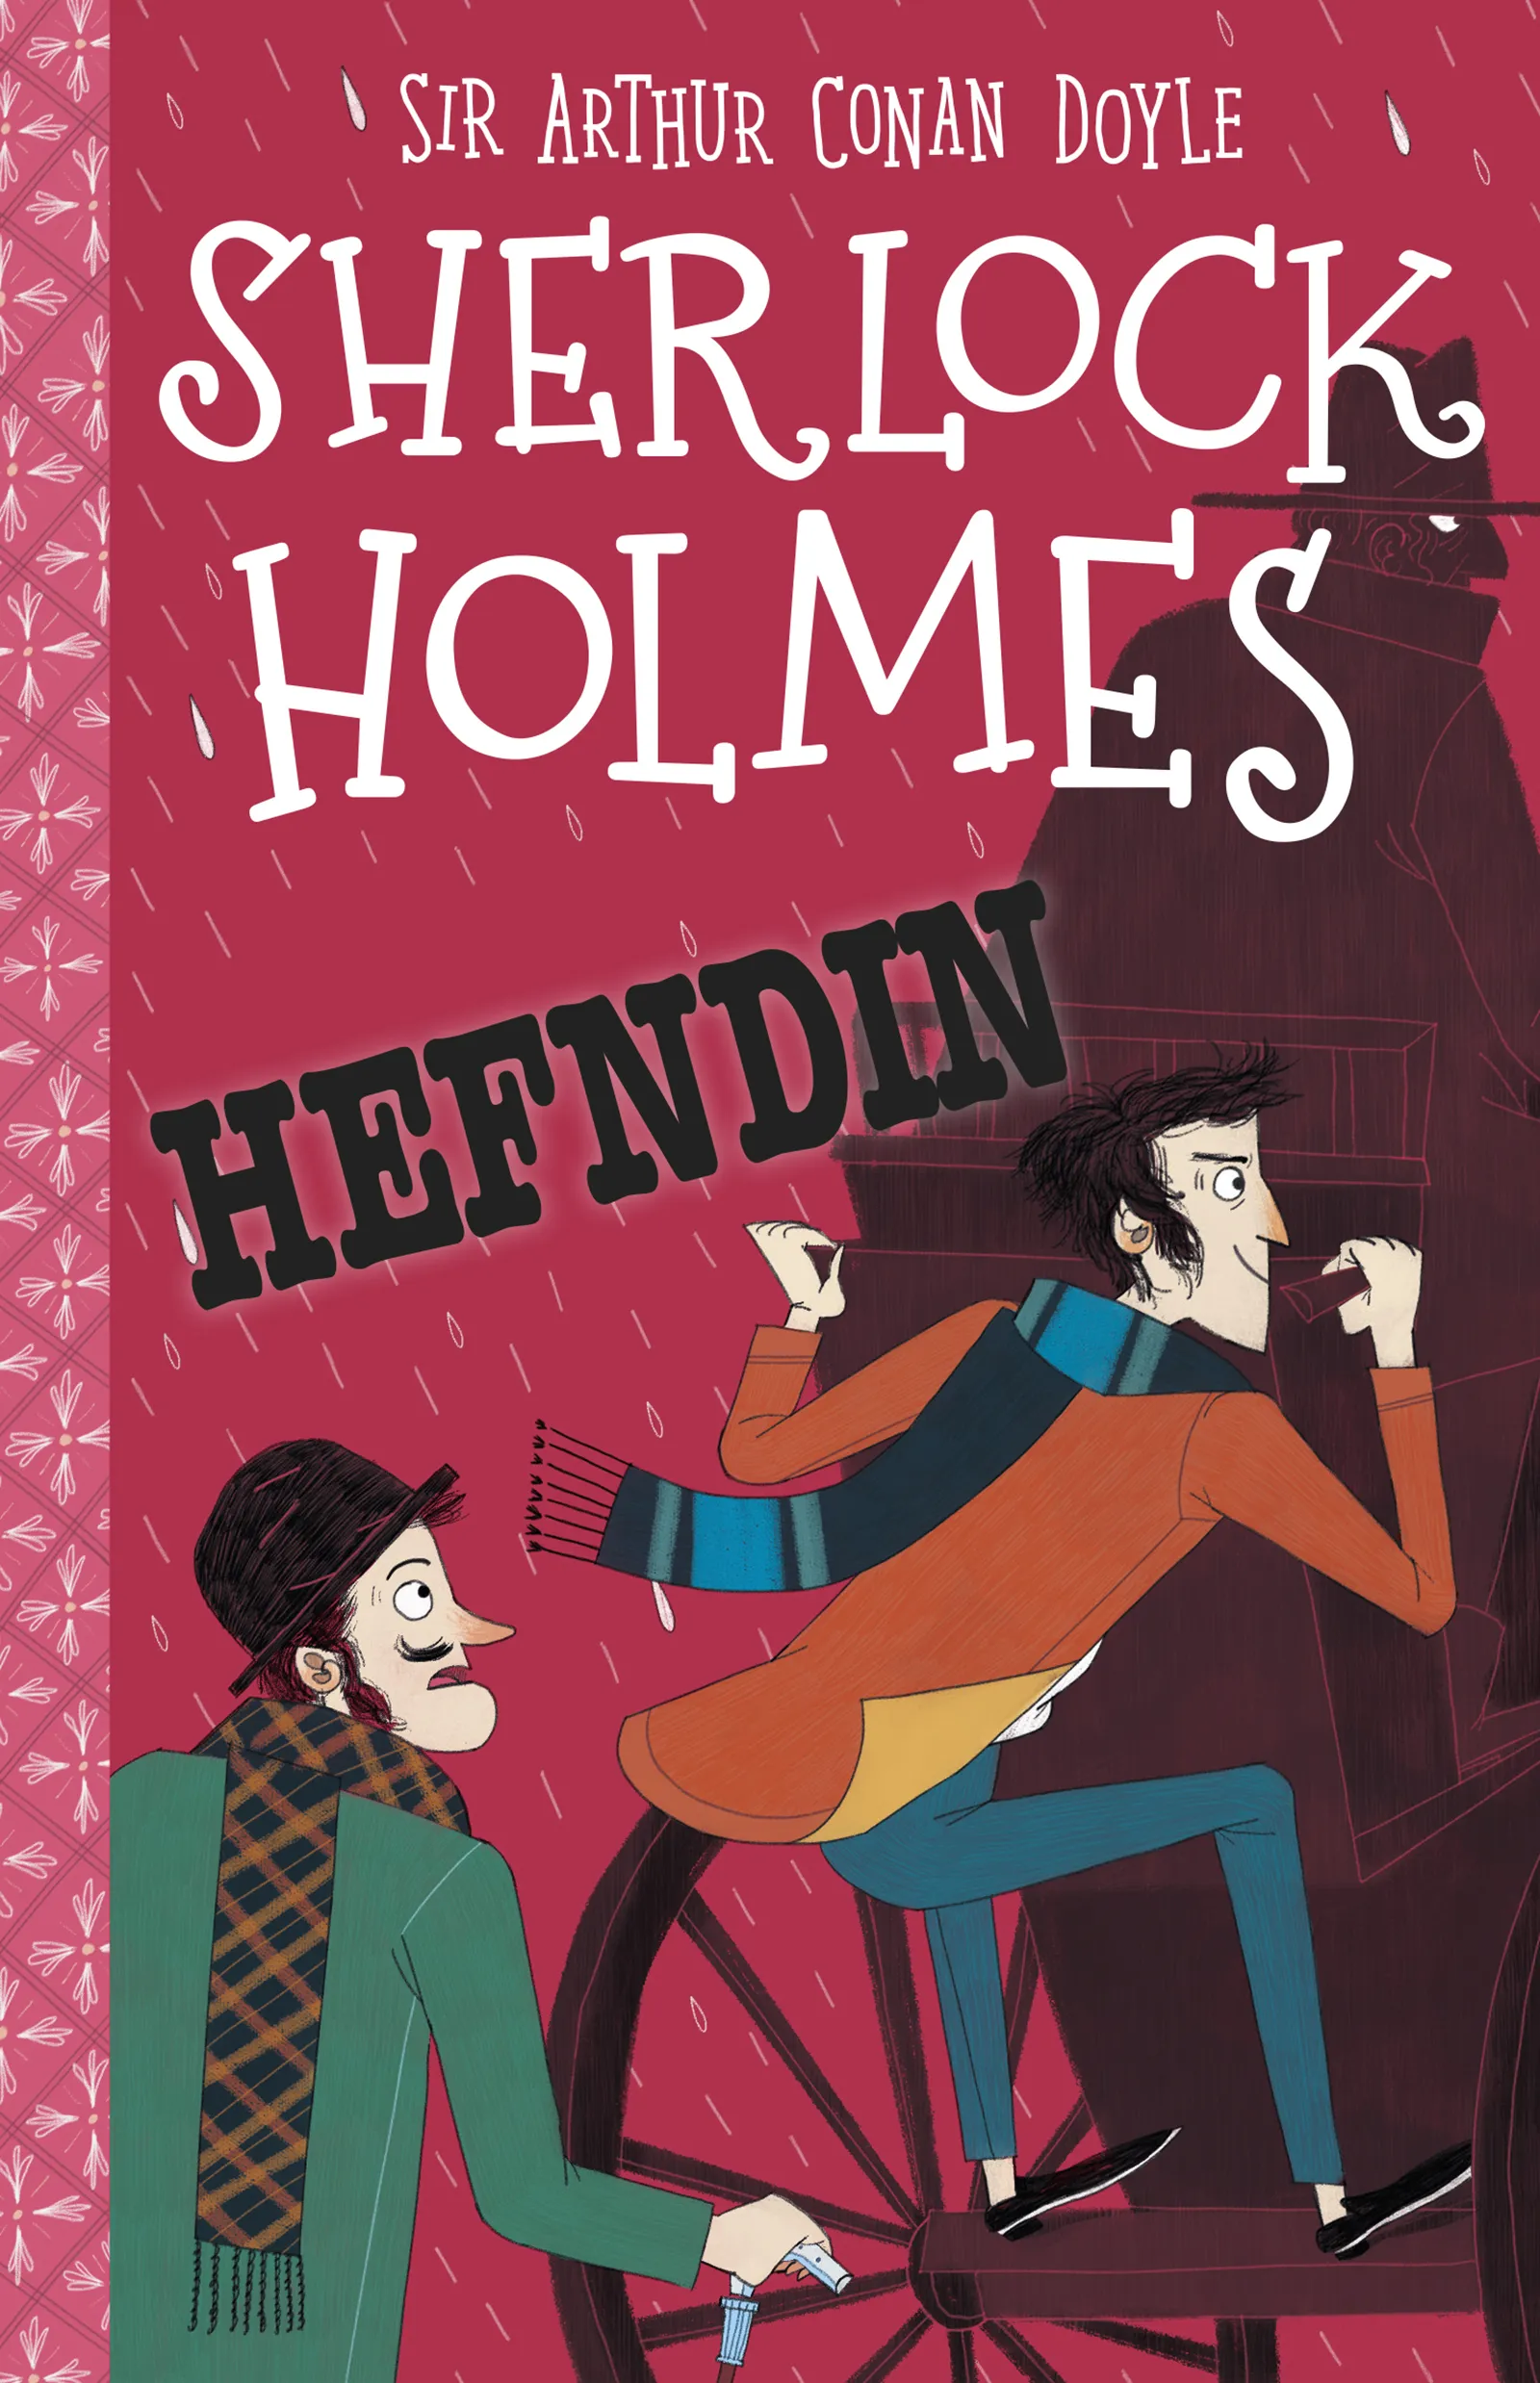 Bókakápa: Sherlock Holmes handa ungum lesendum Hefndin